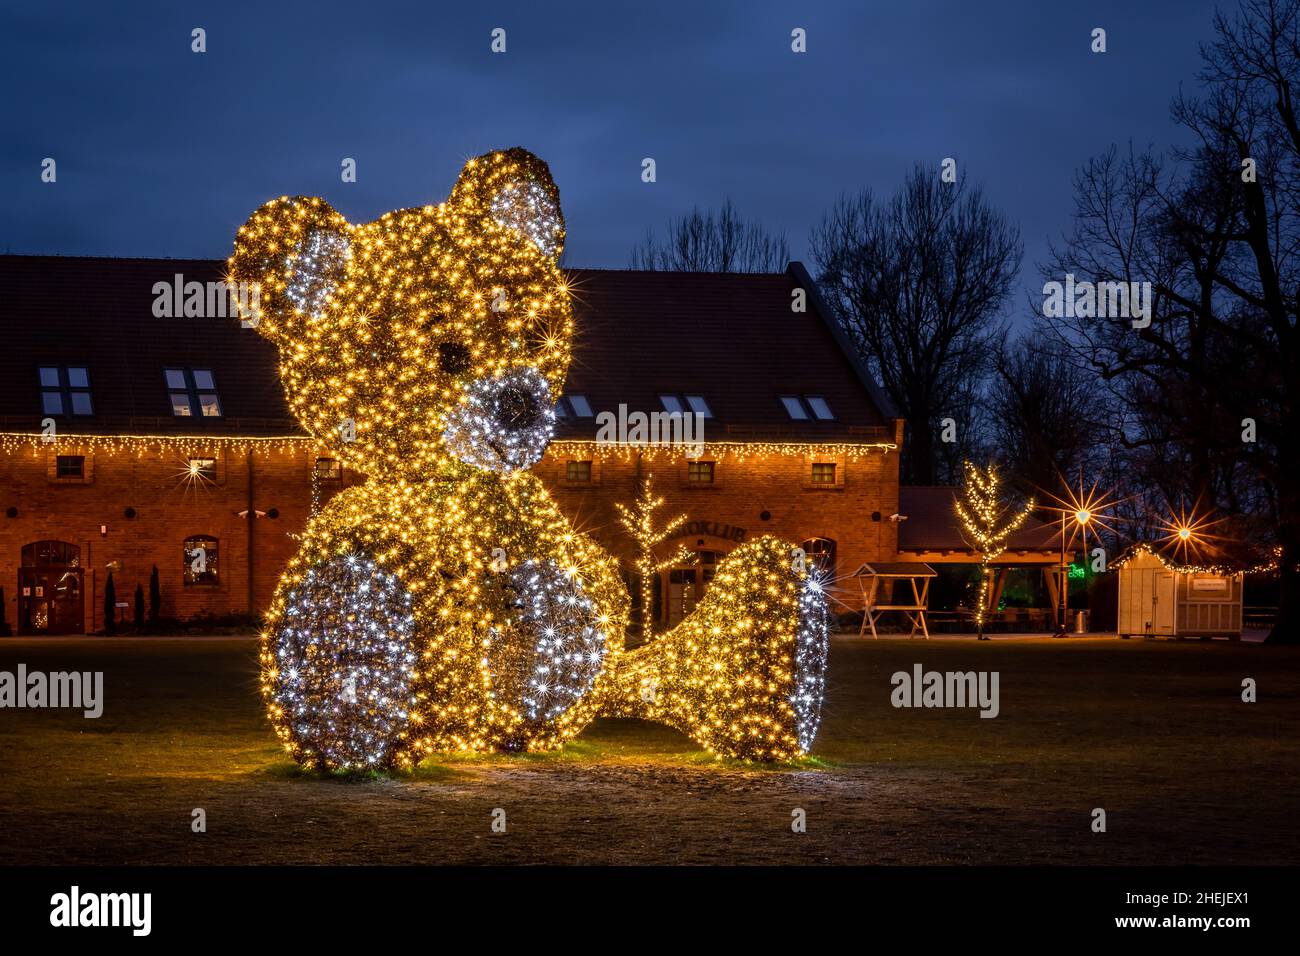 Zamek Topacz, Poland - January 01, 2022: A large LED teddy bear Christmas illumination. Topacz castle in background. Winter night, no people. Stock Photo